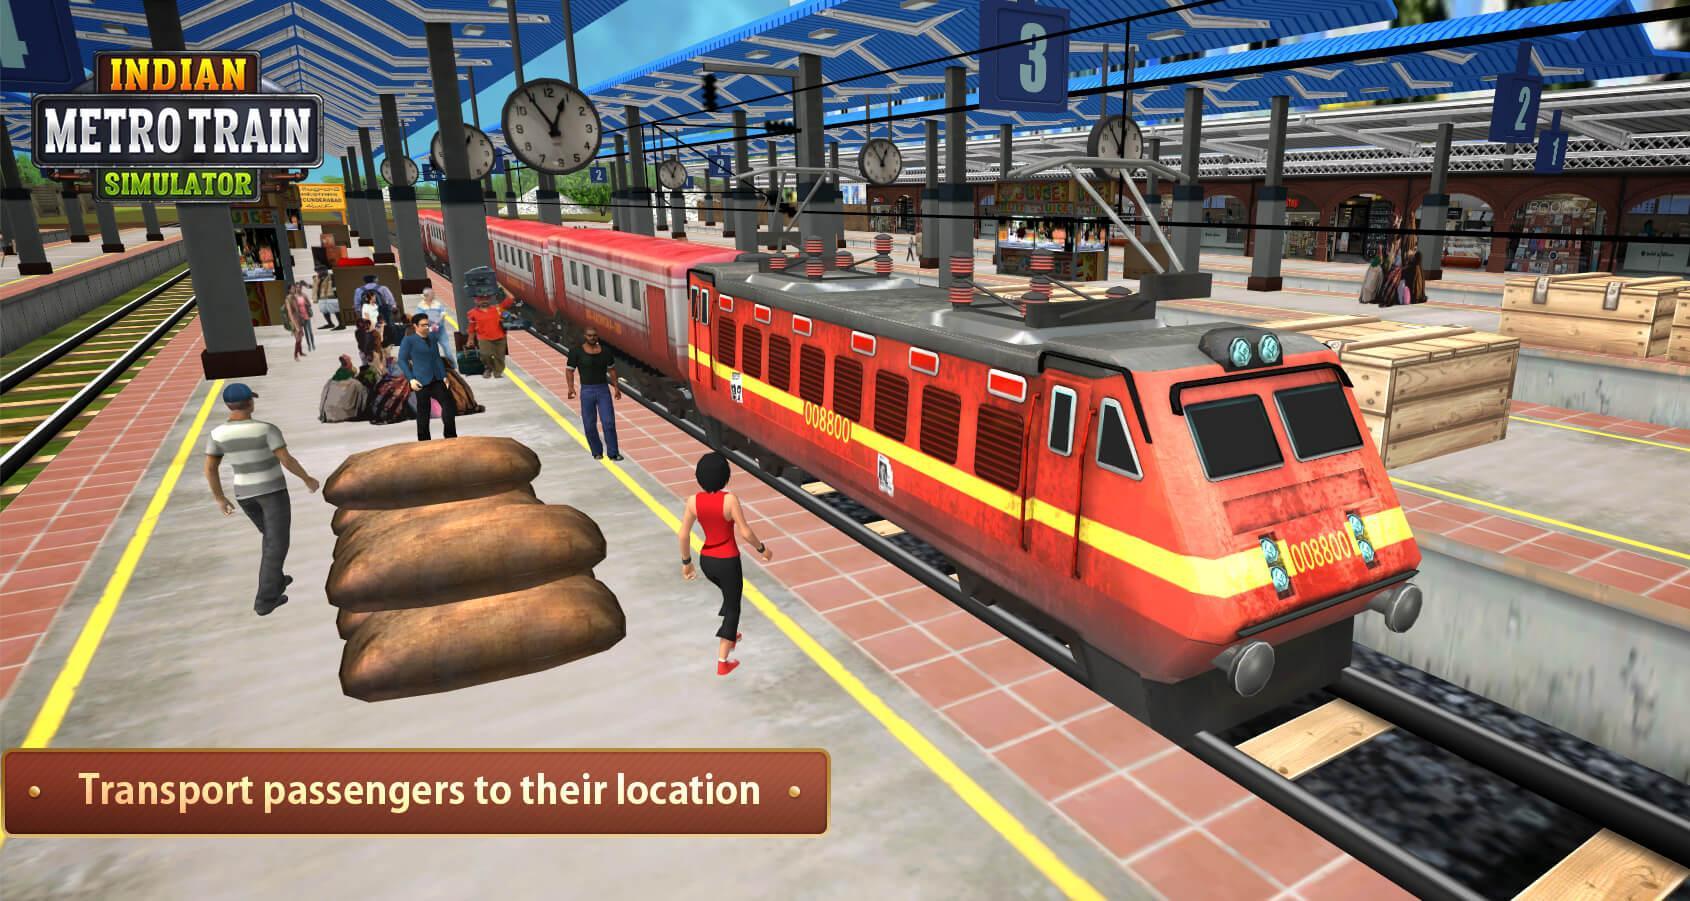 Screenshot 1 of Indische U-Bahn-Zug-Simulation 2020 5.0